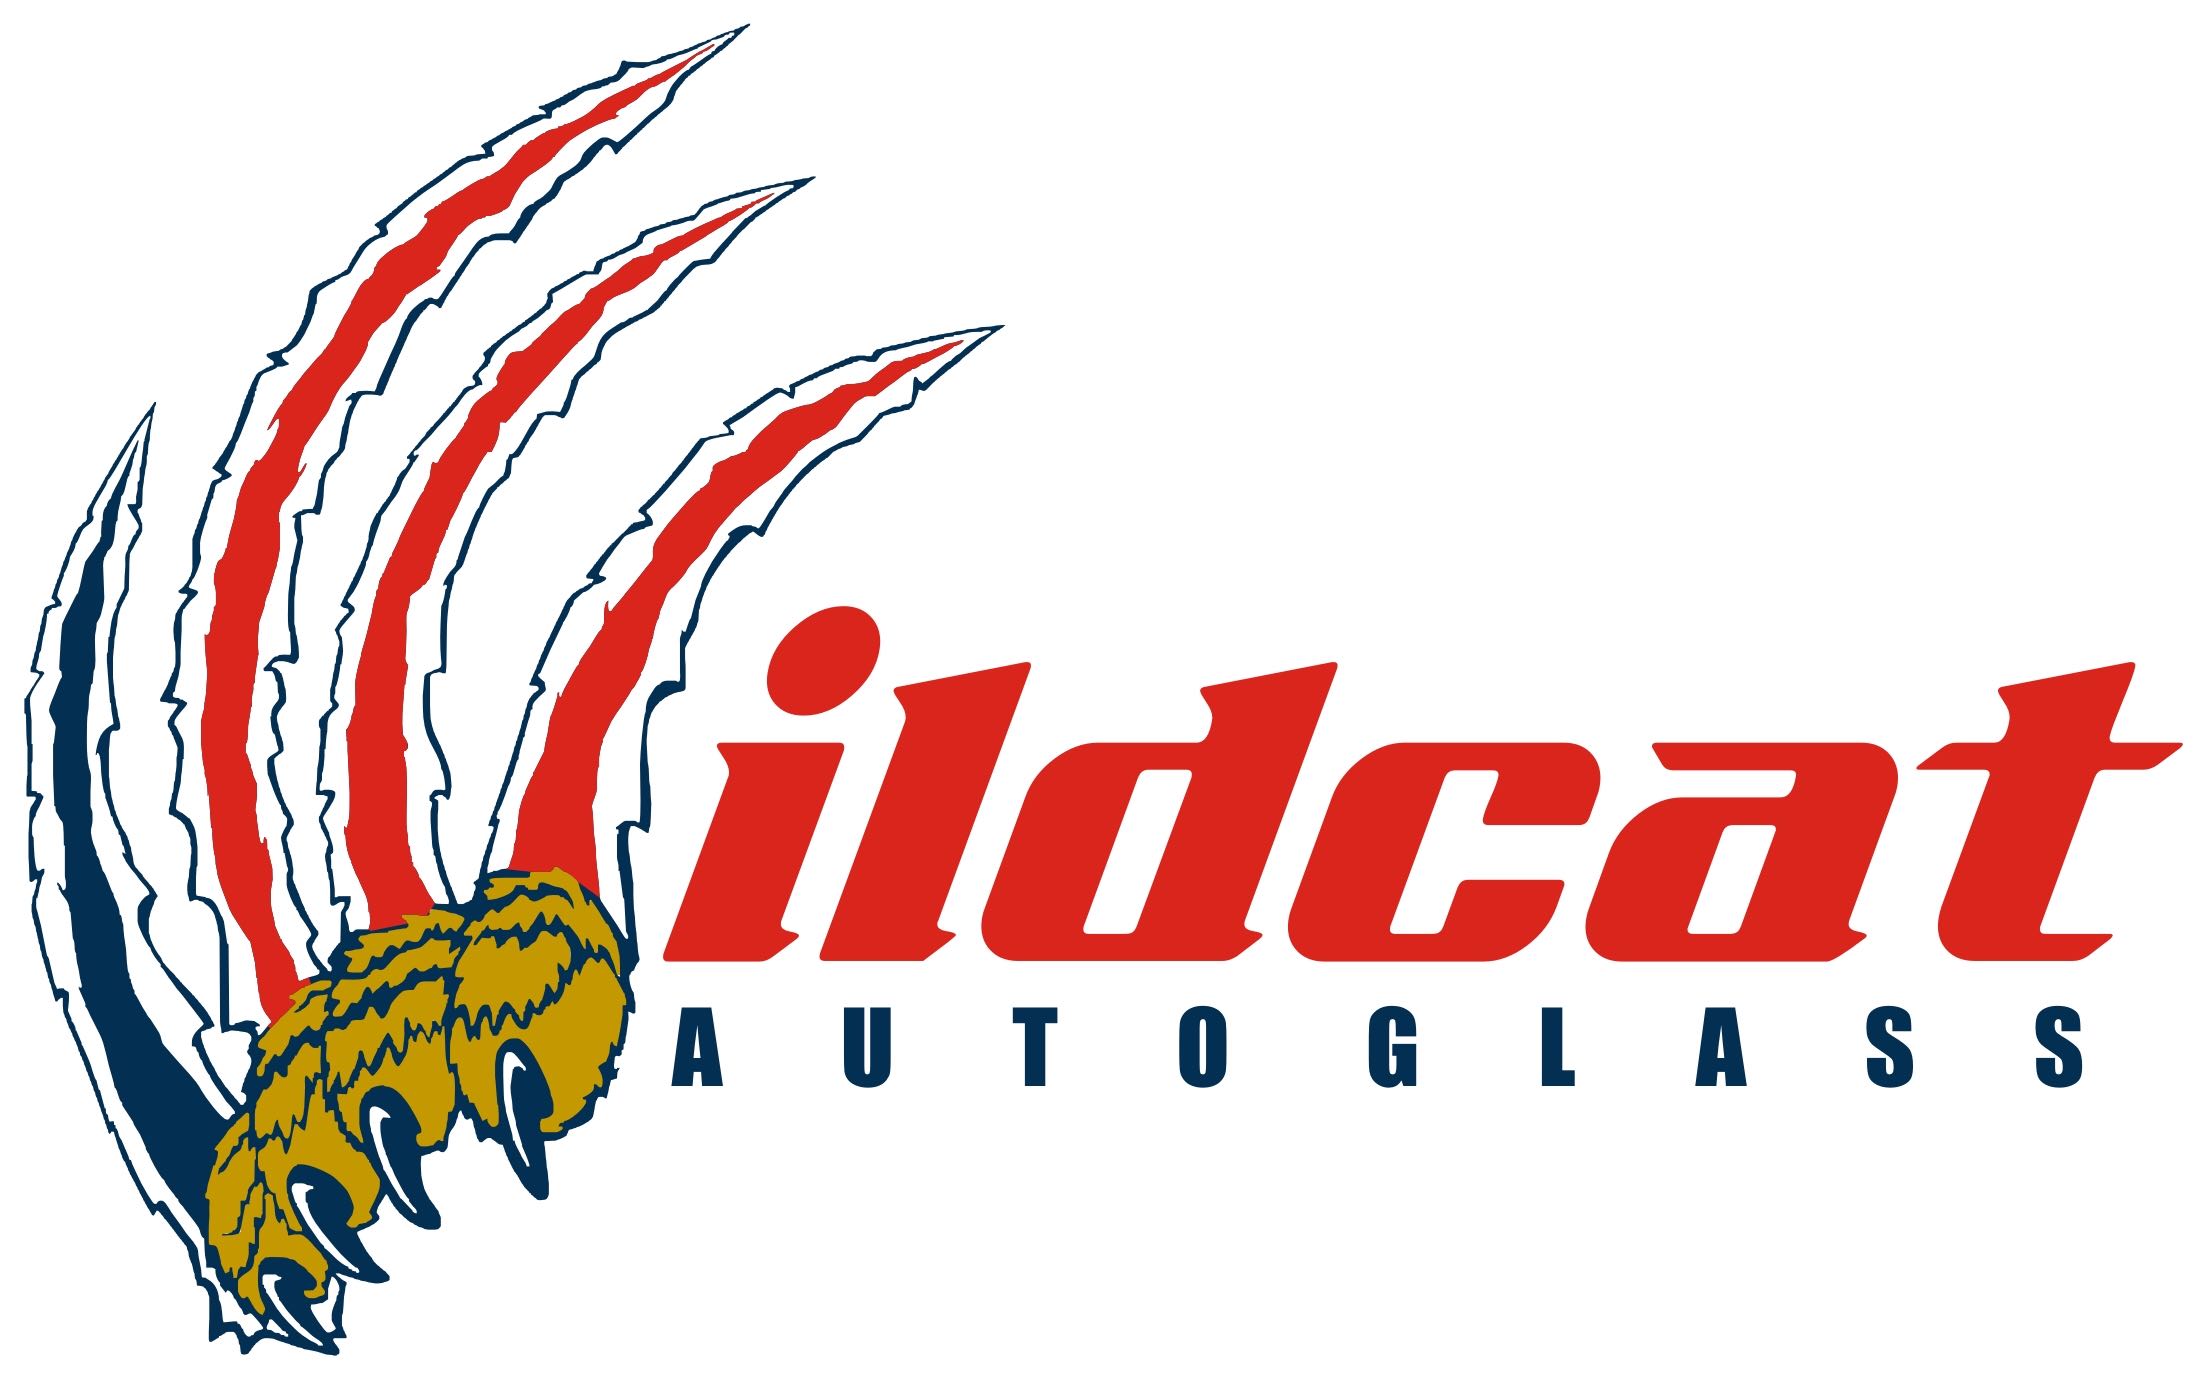 Wildcat Auto Glass